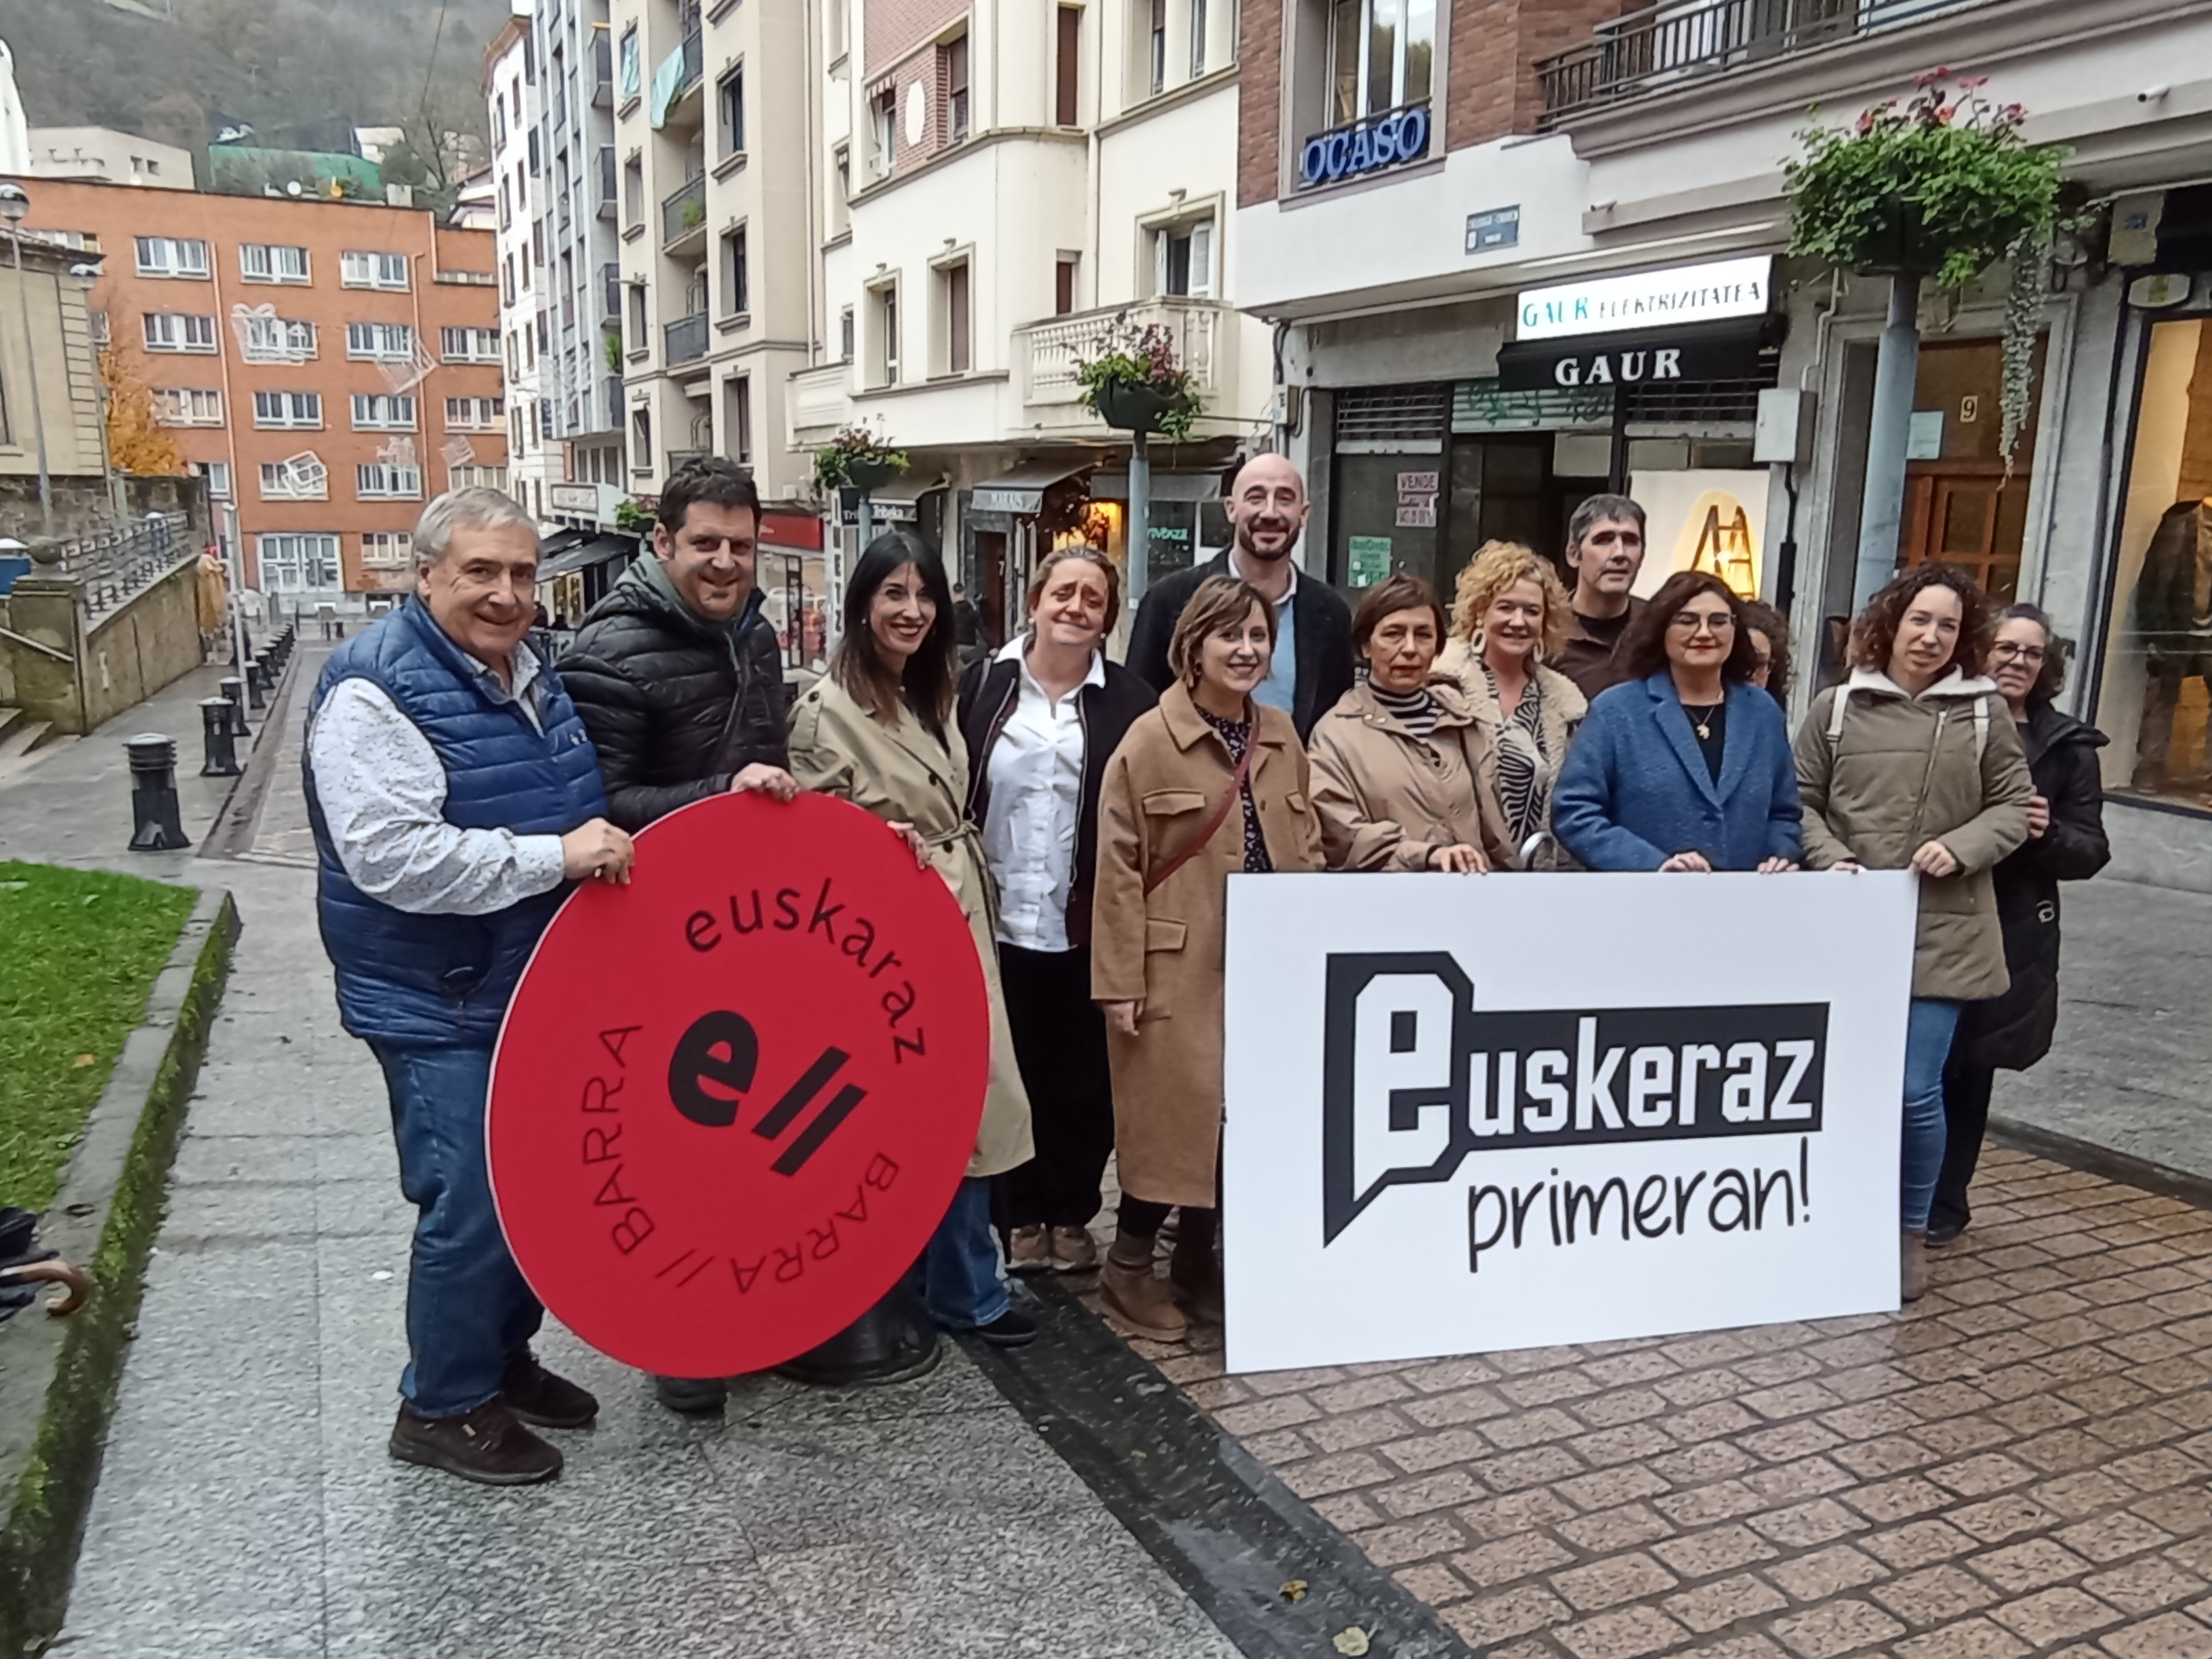 Euskaraz barra-barra eta Euskeraz Primeran! en Eibar